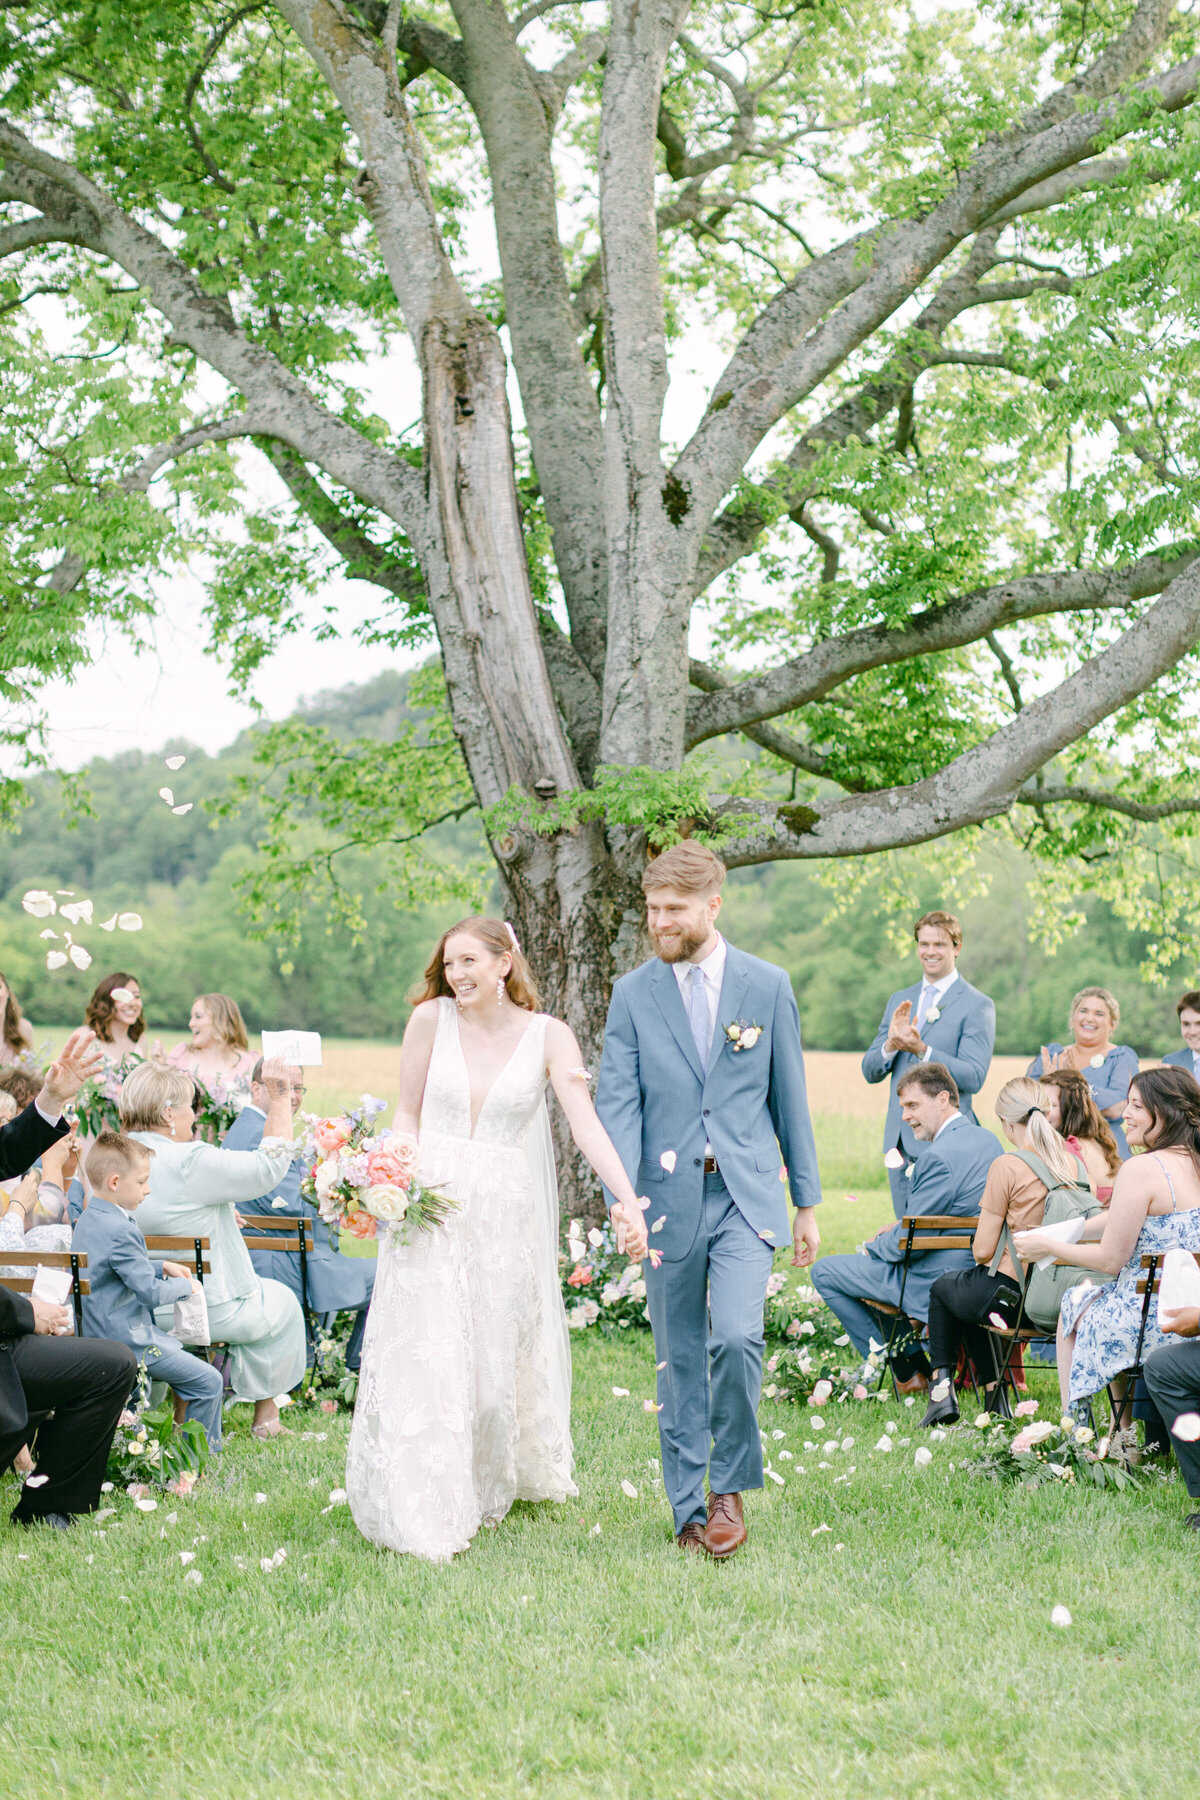 Ava-Vienneau-Nashville-Wedding-Photographer-Southall-Meadows-13